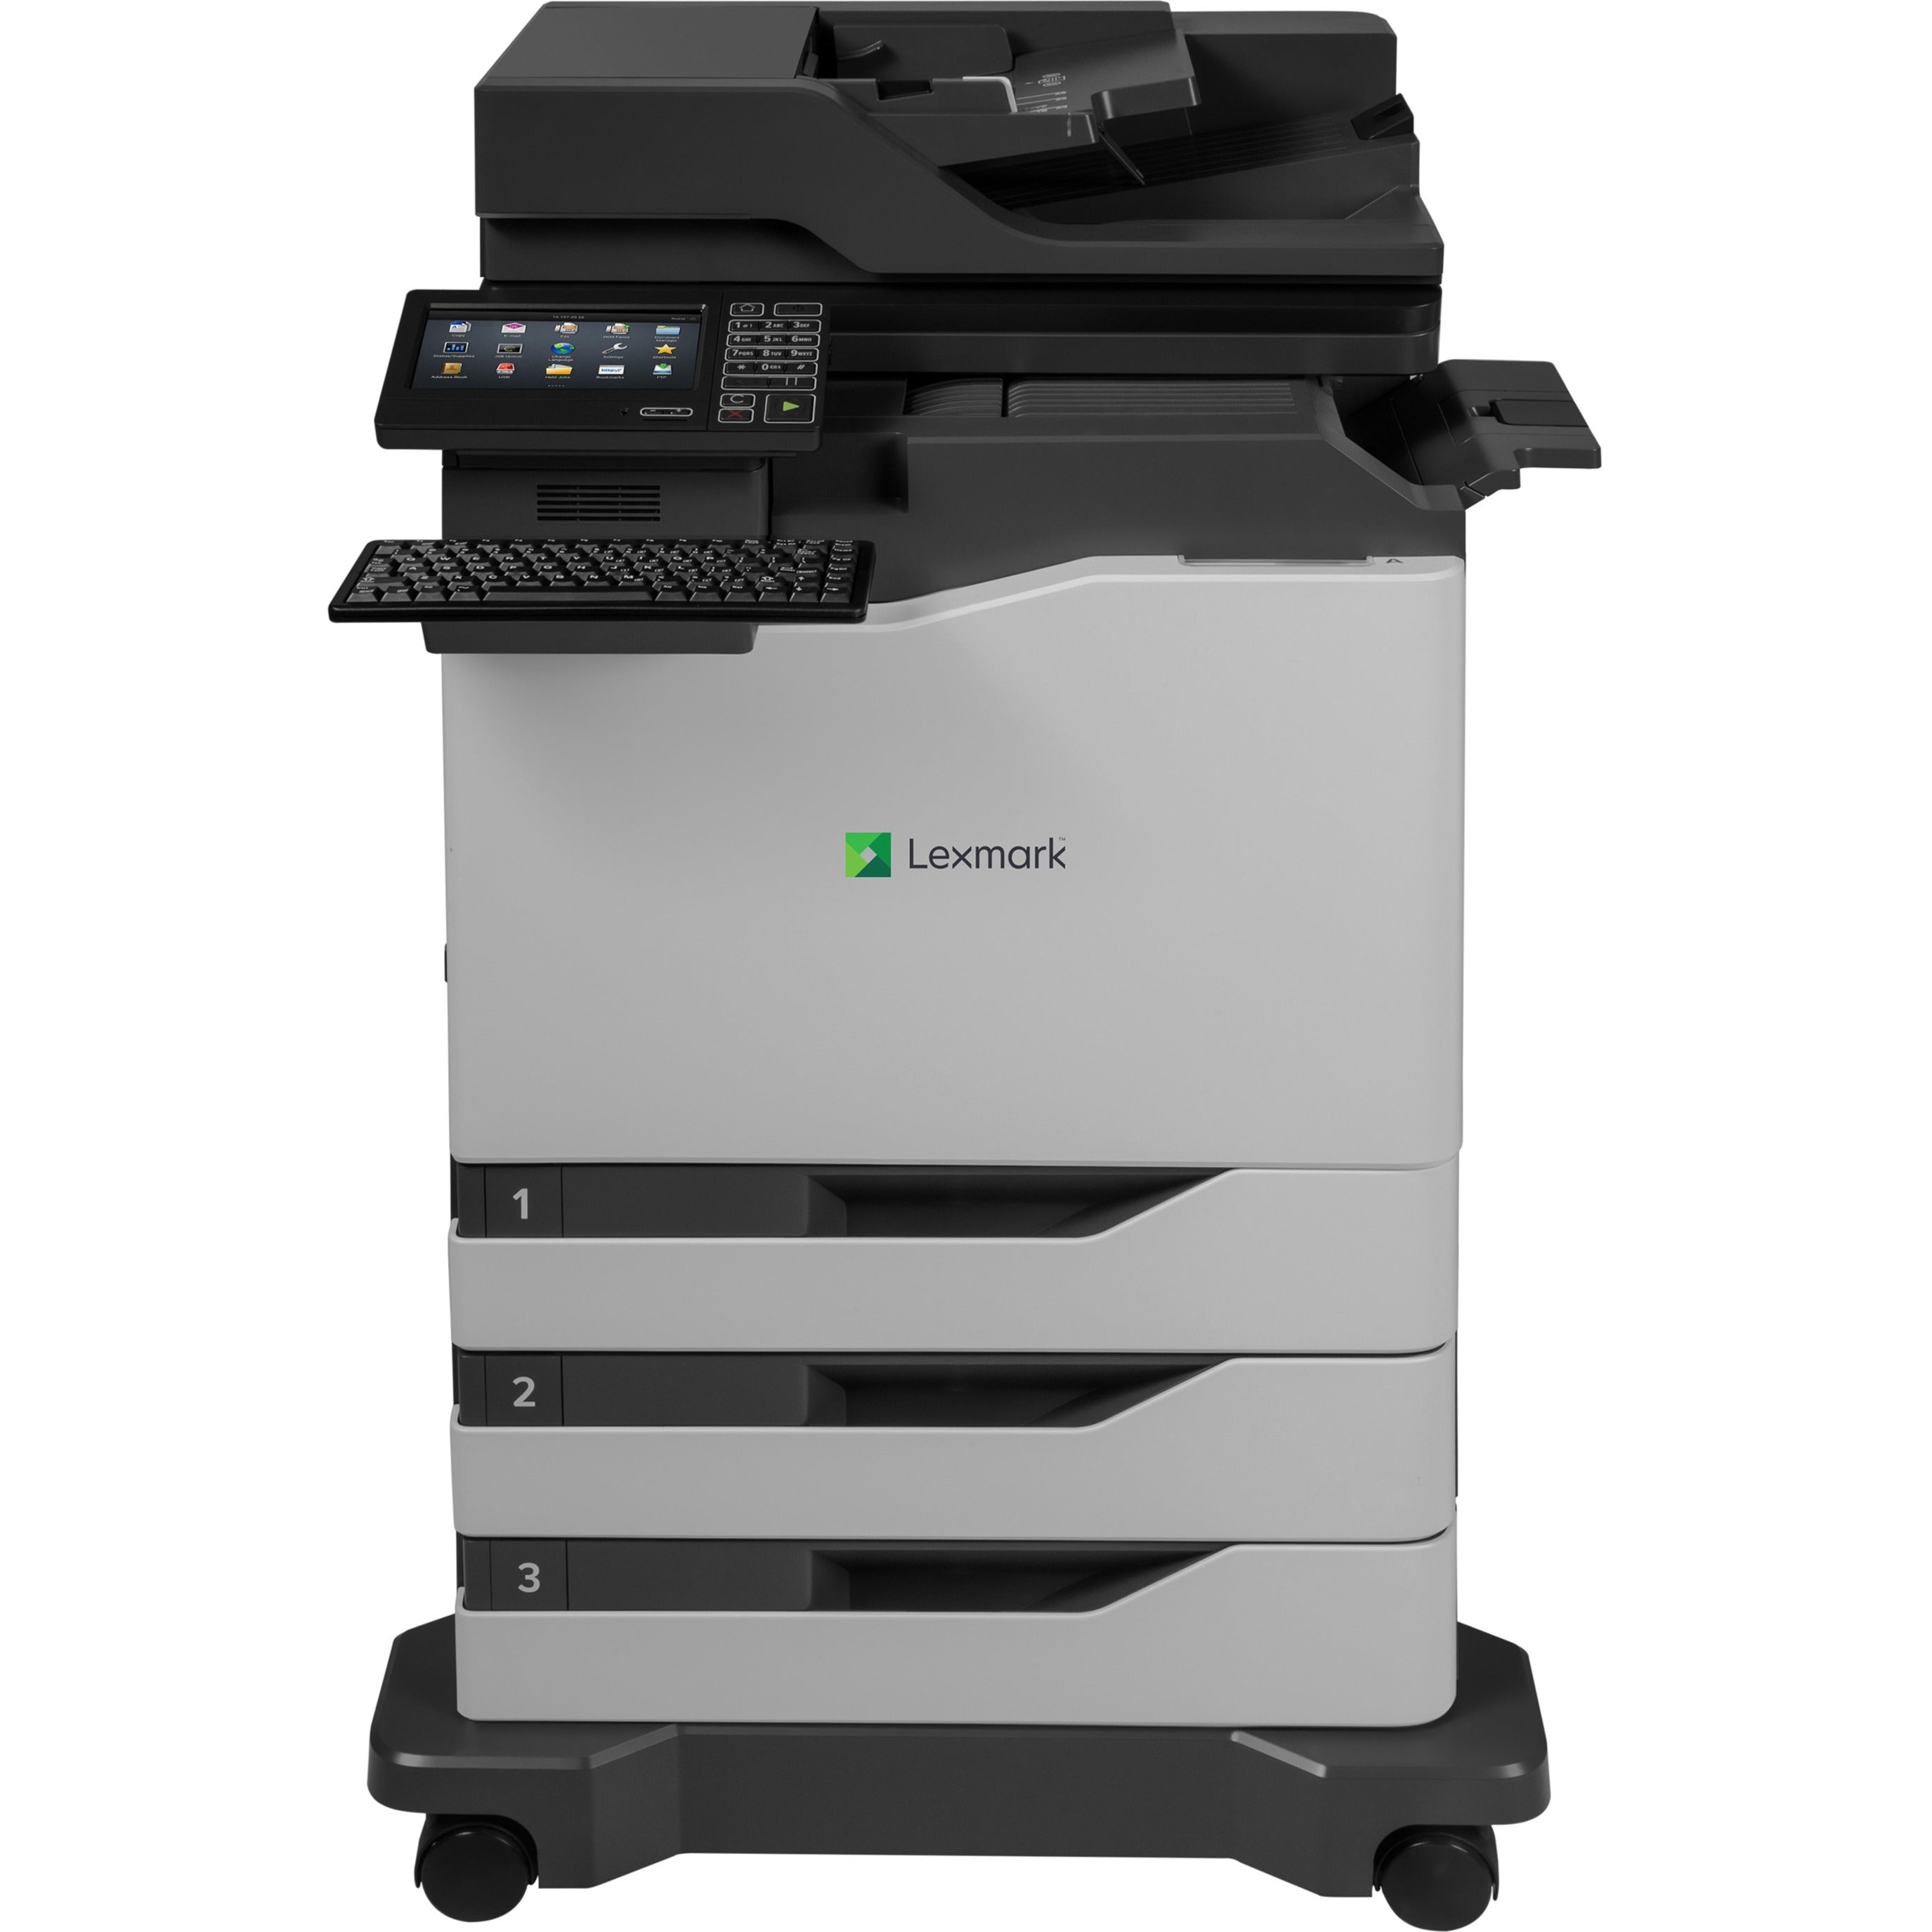 Lexmark 42KT077 CX820dtfe Colour Laser Multifunction Printer, Government Compliant